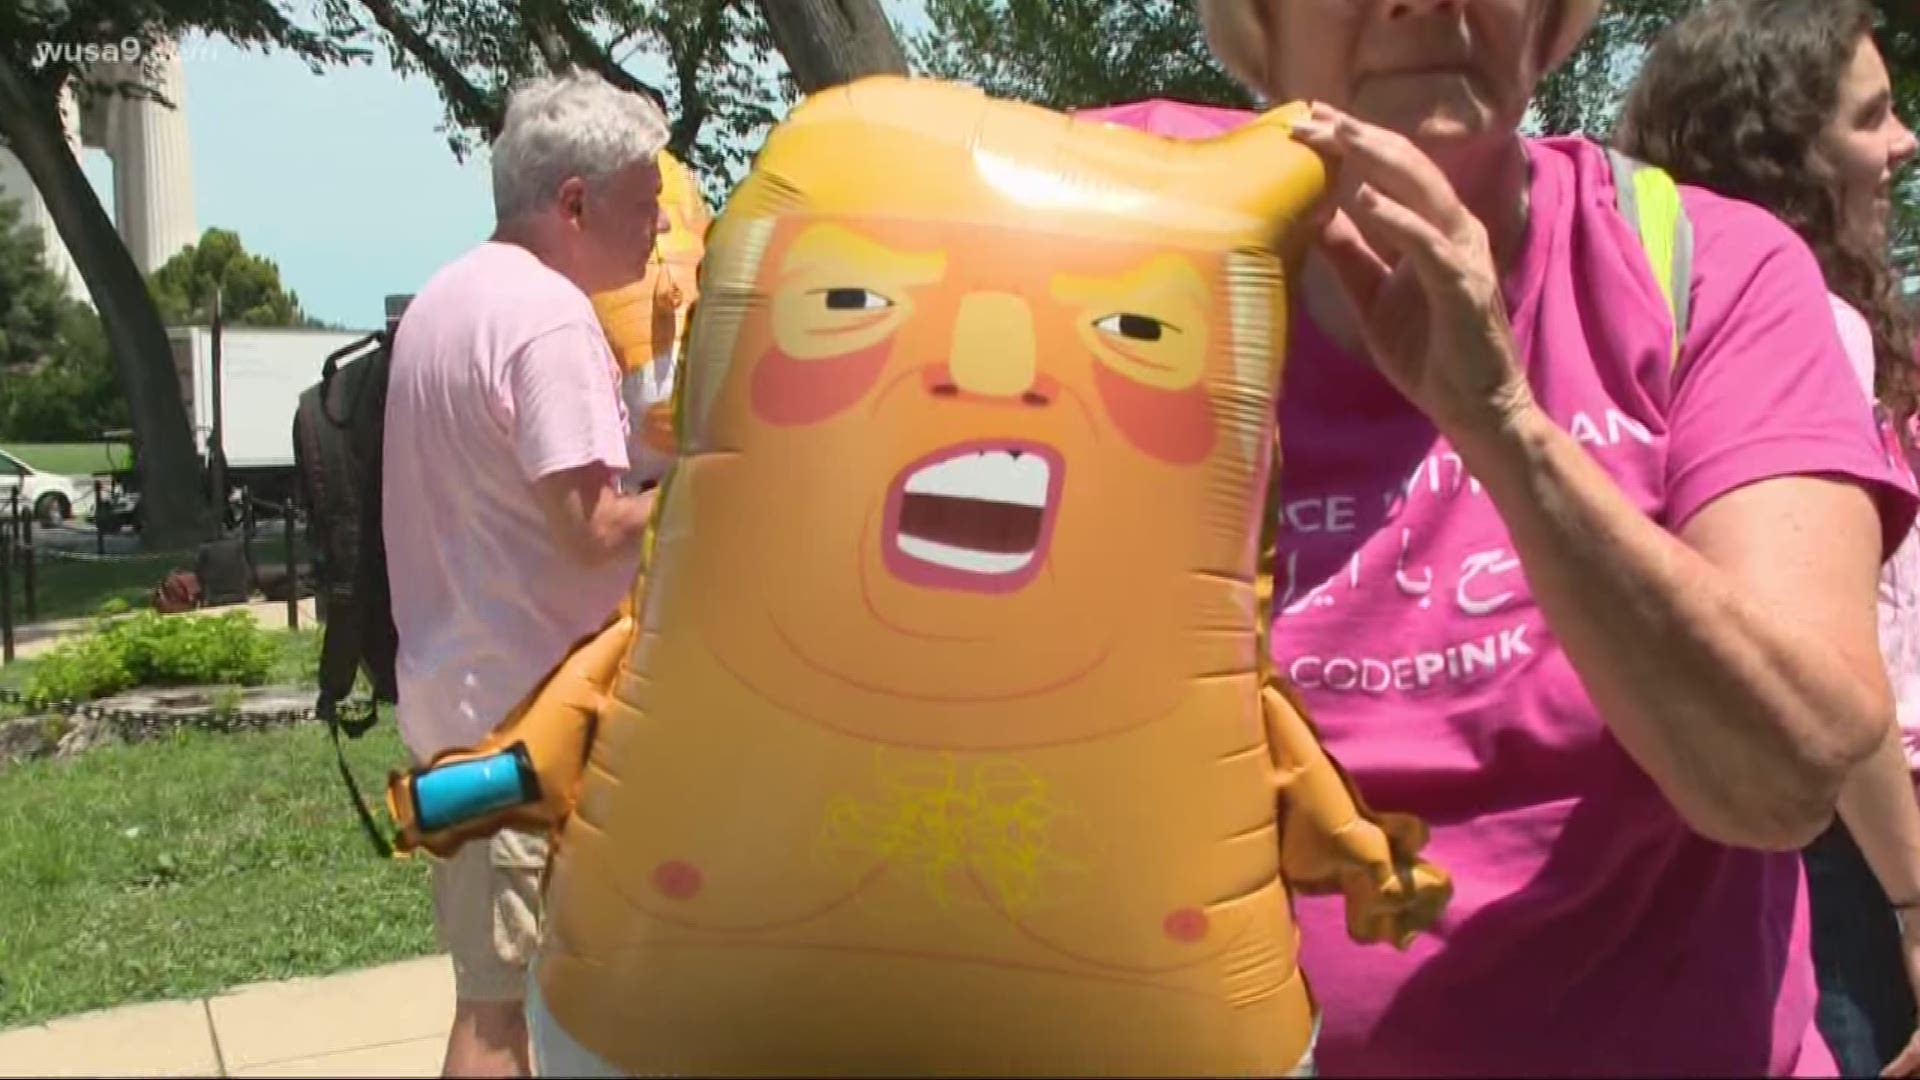 22" x 17" Baby Donald Trump Impeach Foil Balloon Funny Party Balloon Decoration~ 